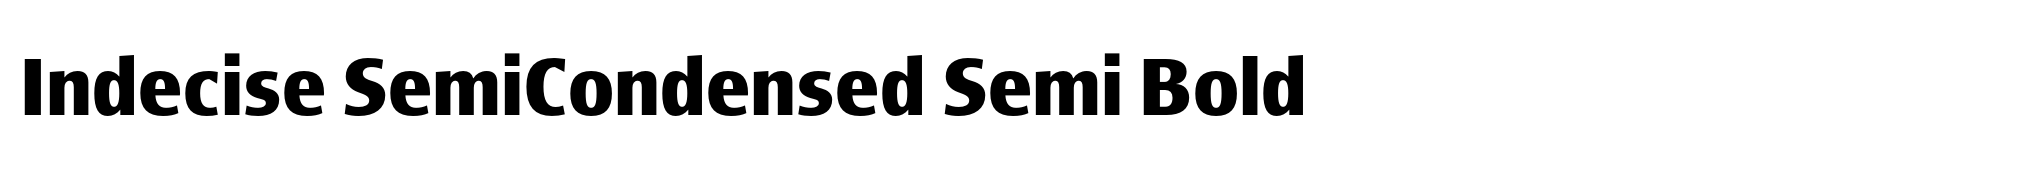 Indecise SemiCondensed Semi Bold image